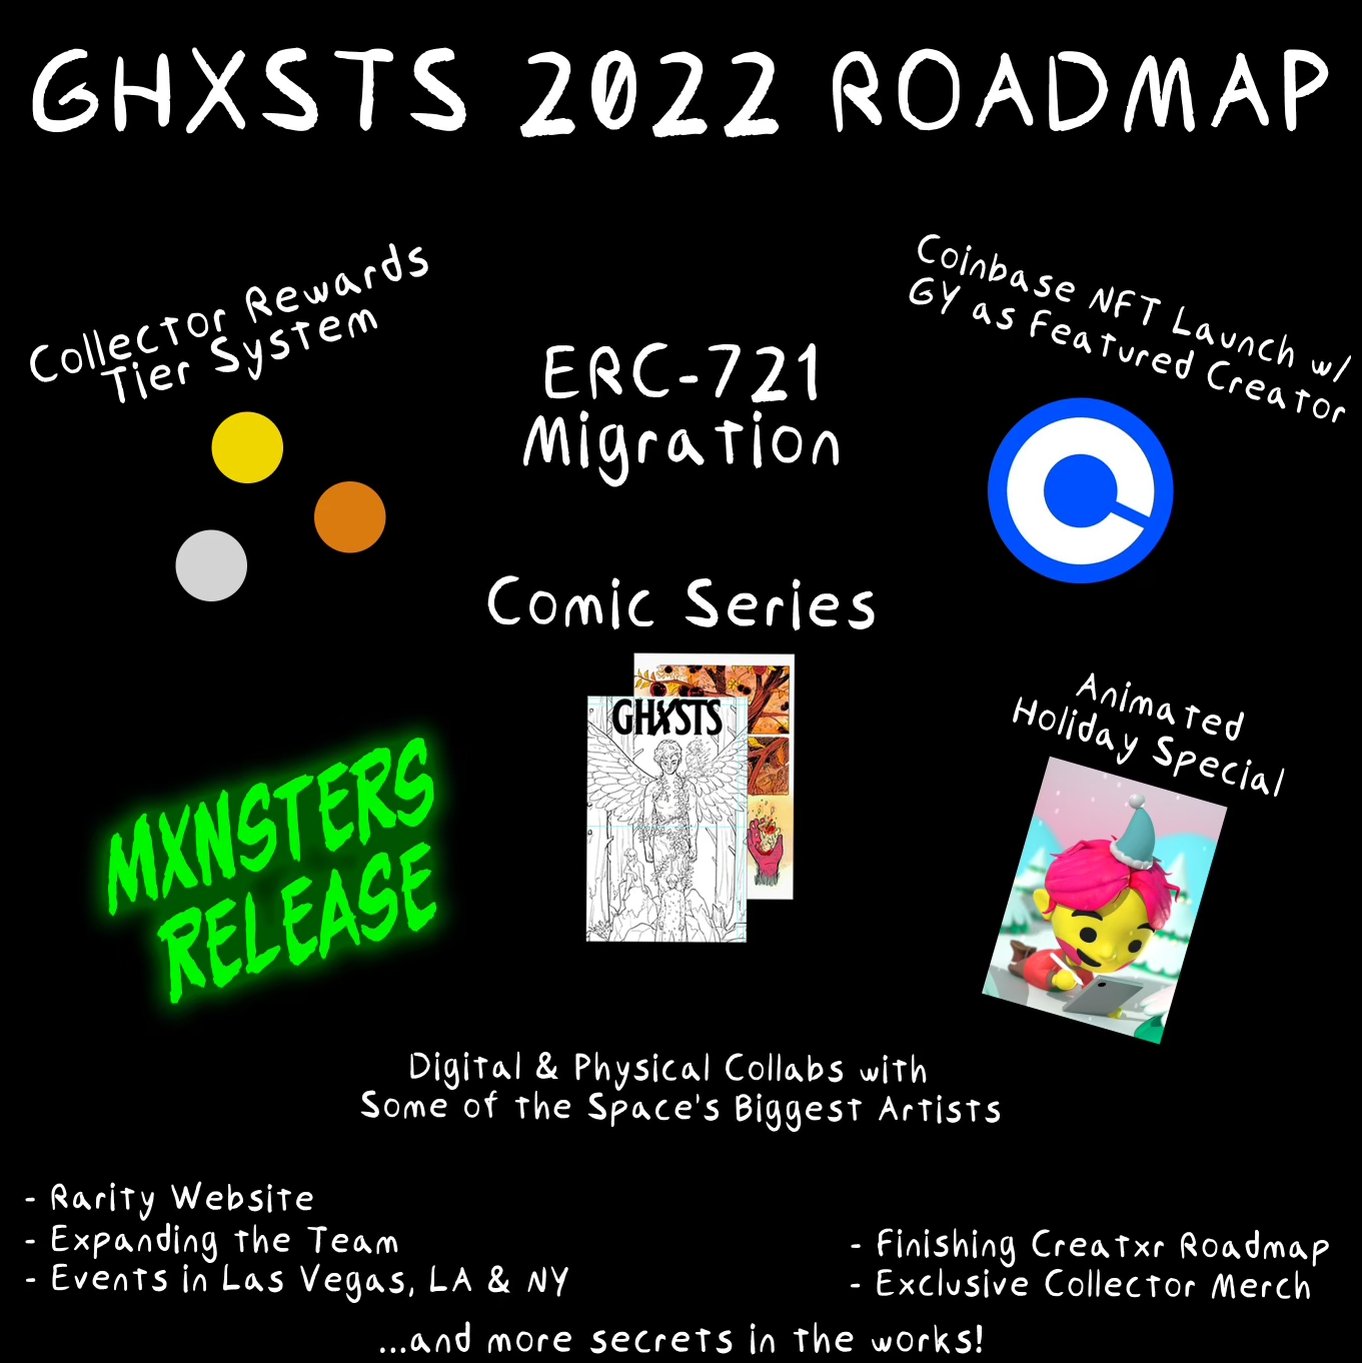 Ghxsts 2022 roadmap